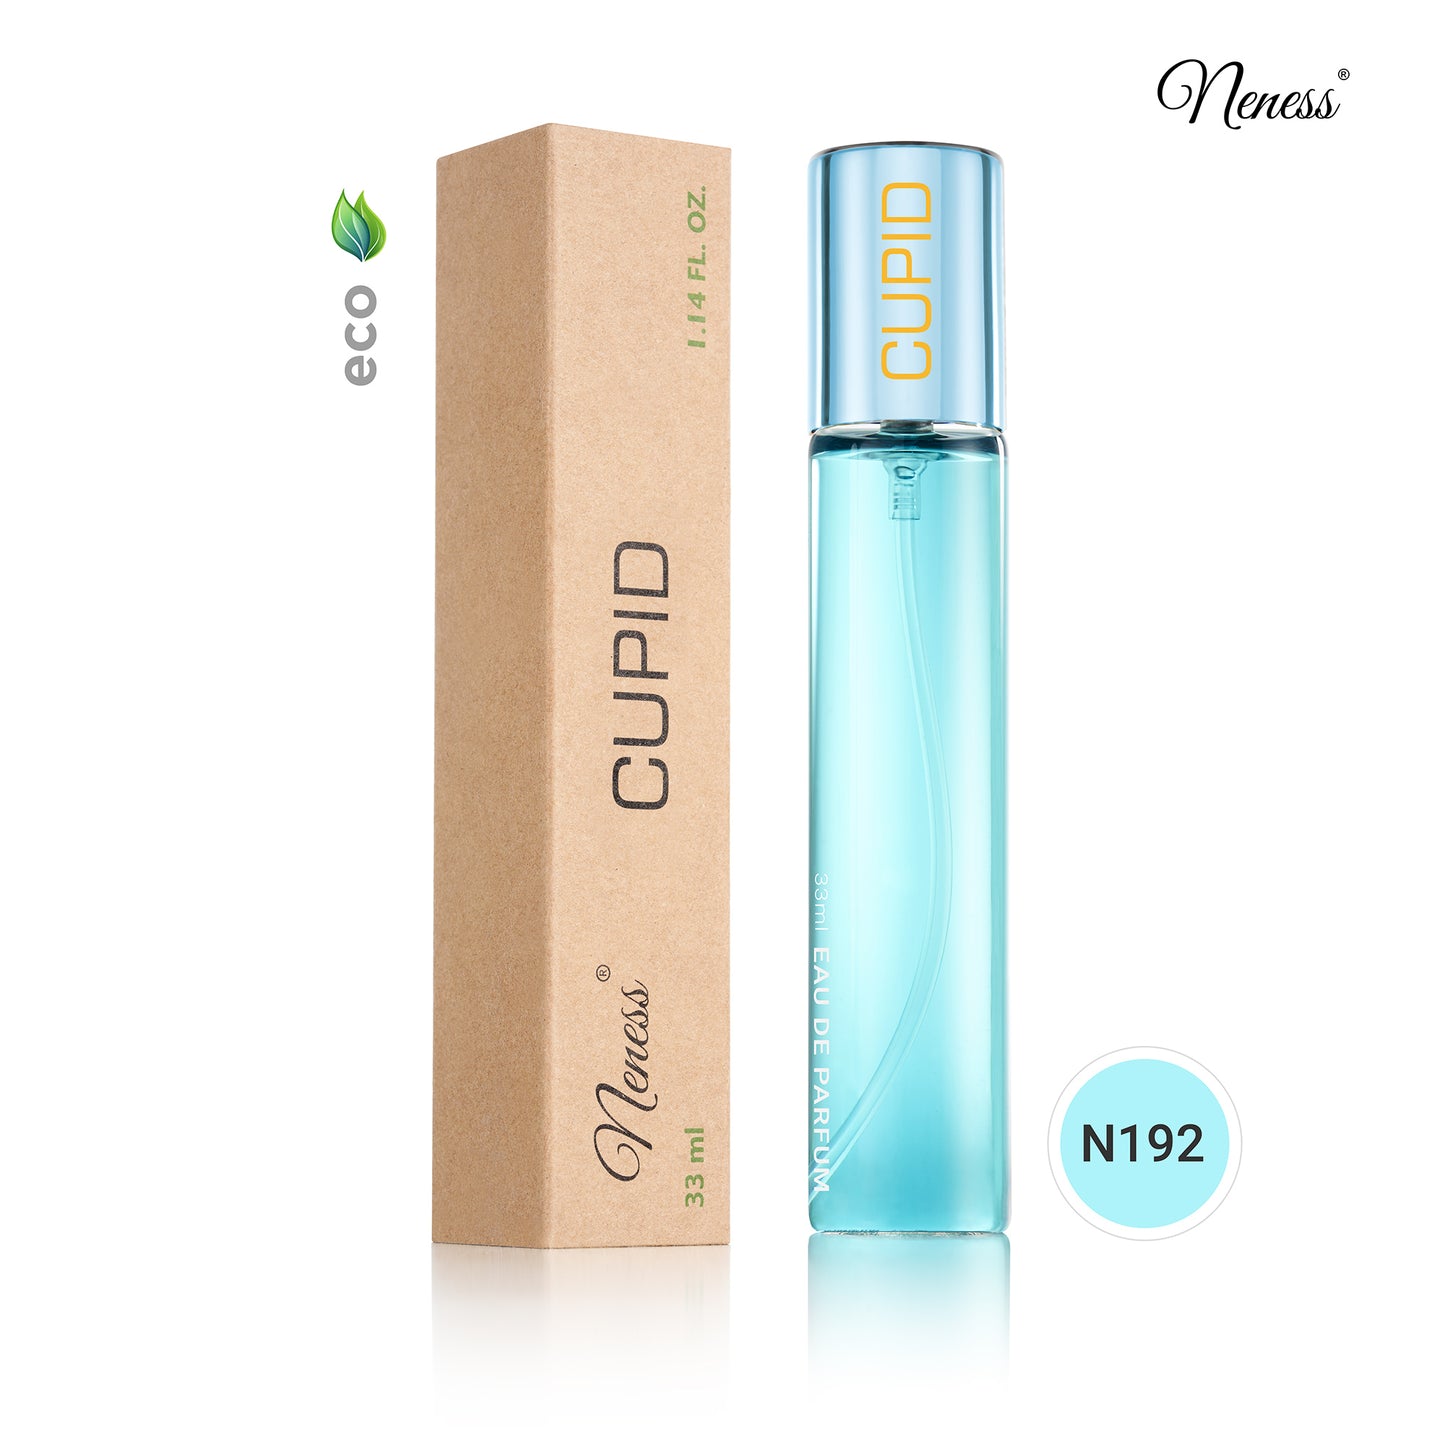 N192. Neness Cupid - 33 ml - Perfumes For Men